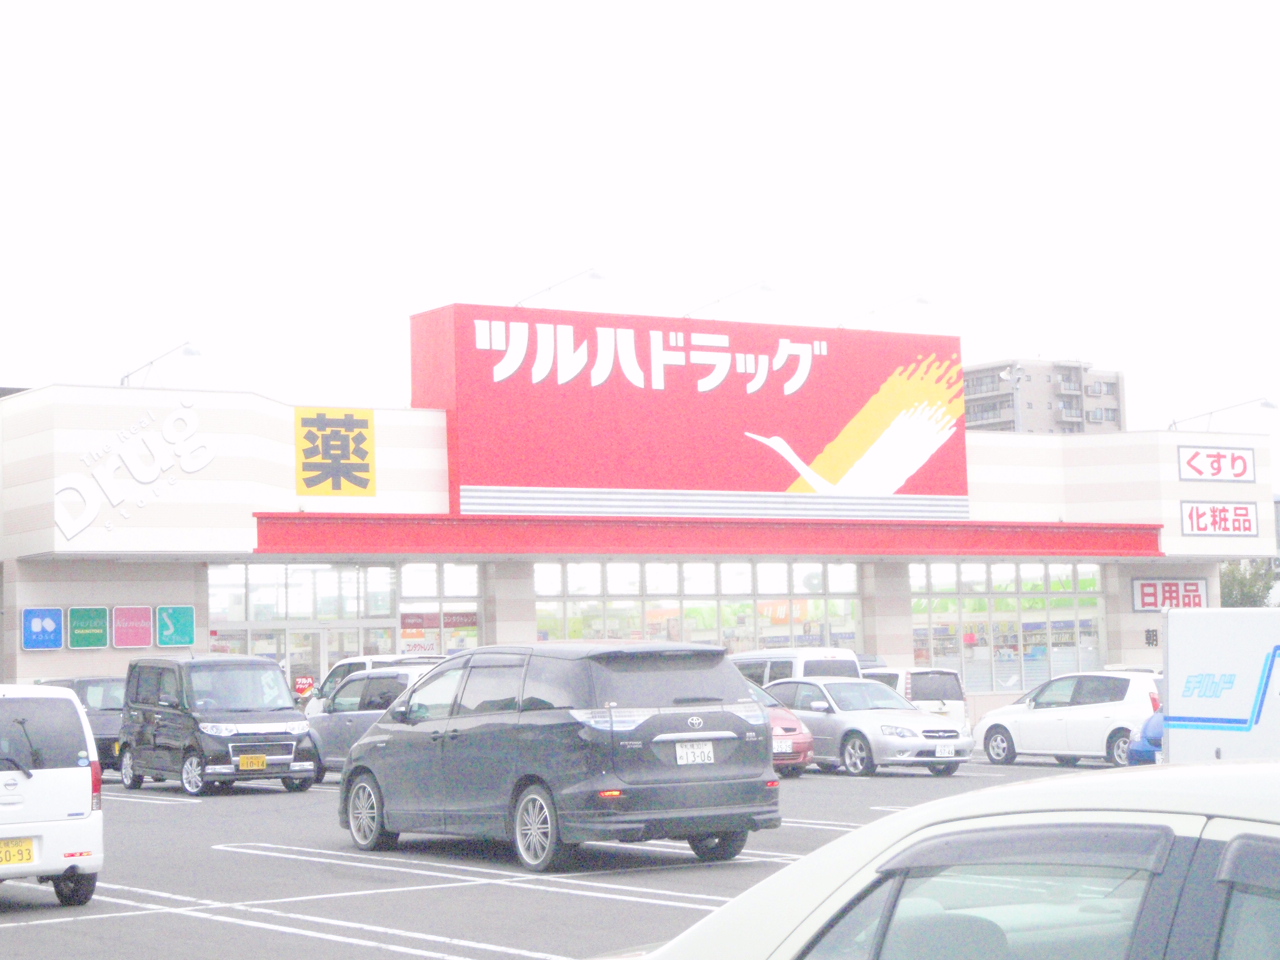 Dorakkusutoa. Tsuruha drag Asari shop 460m until (drugstore)